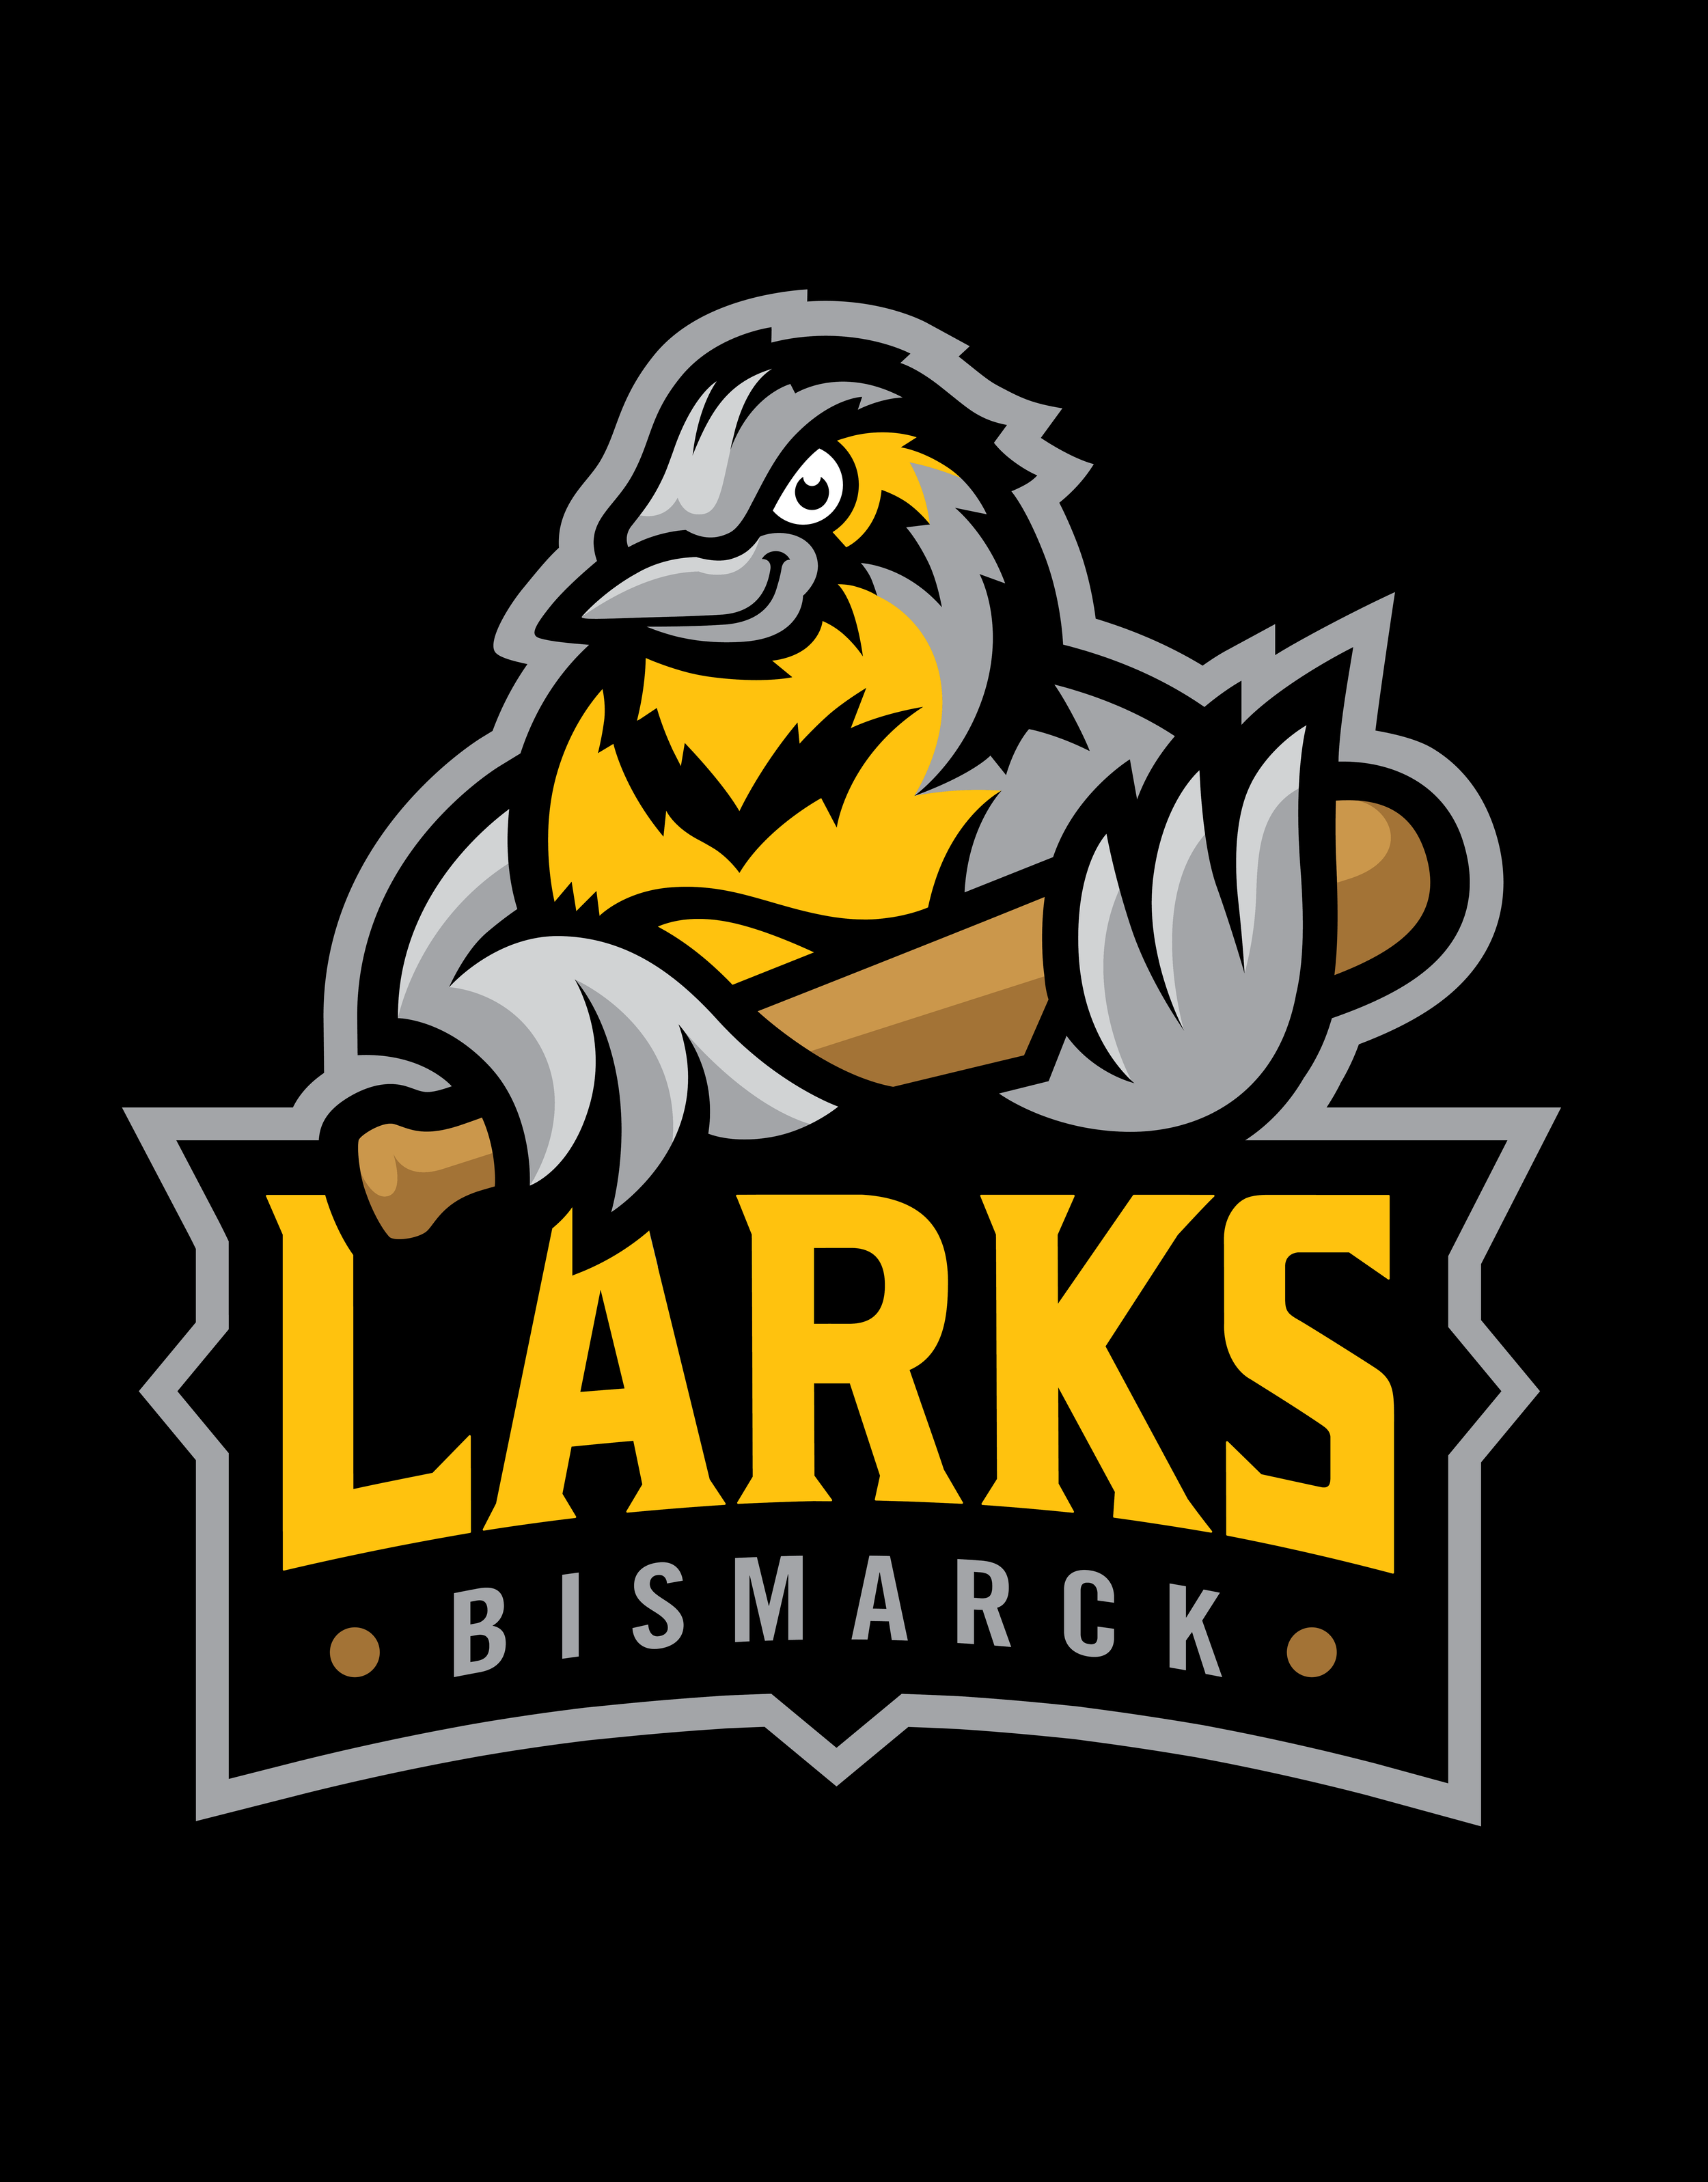 Bismarck Larks Baseball — Worthen Design